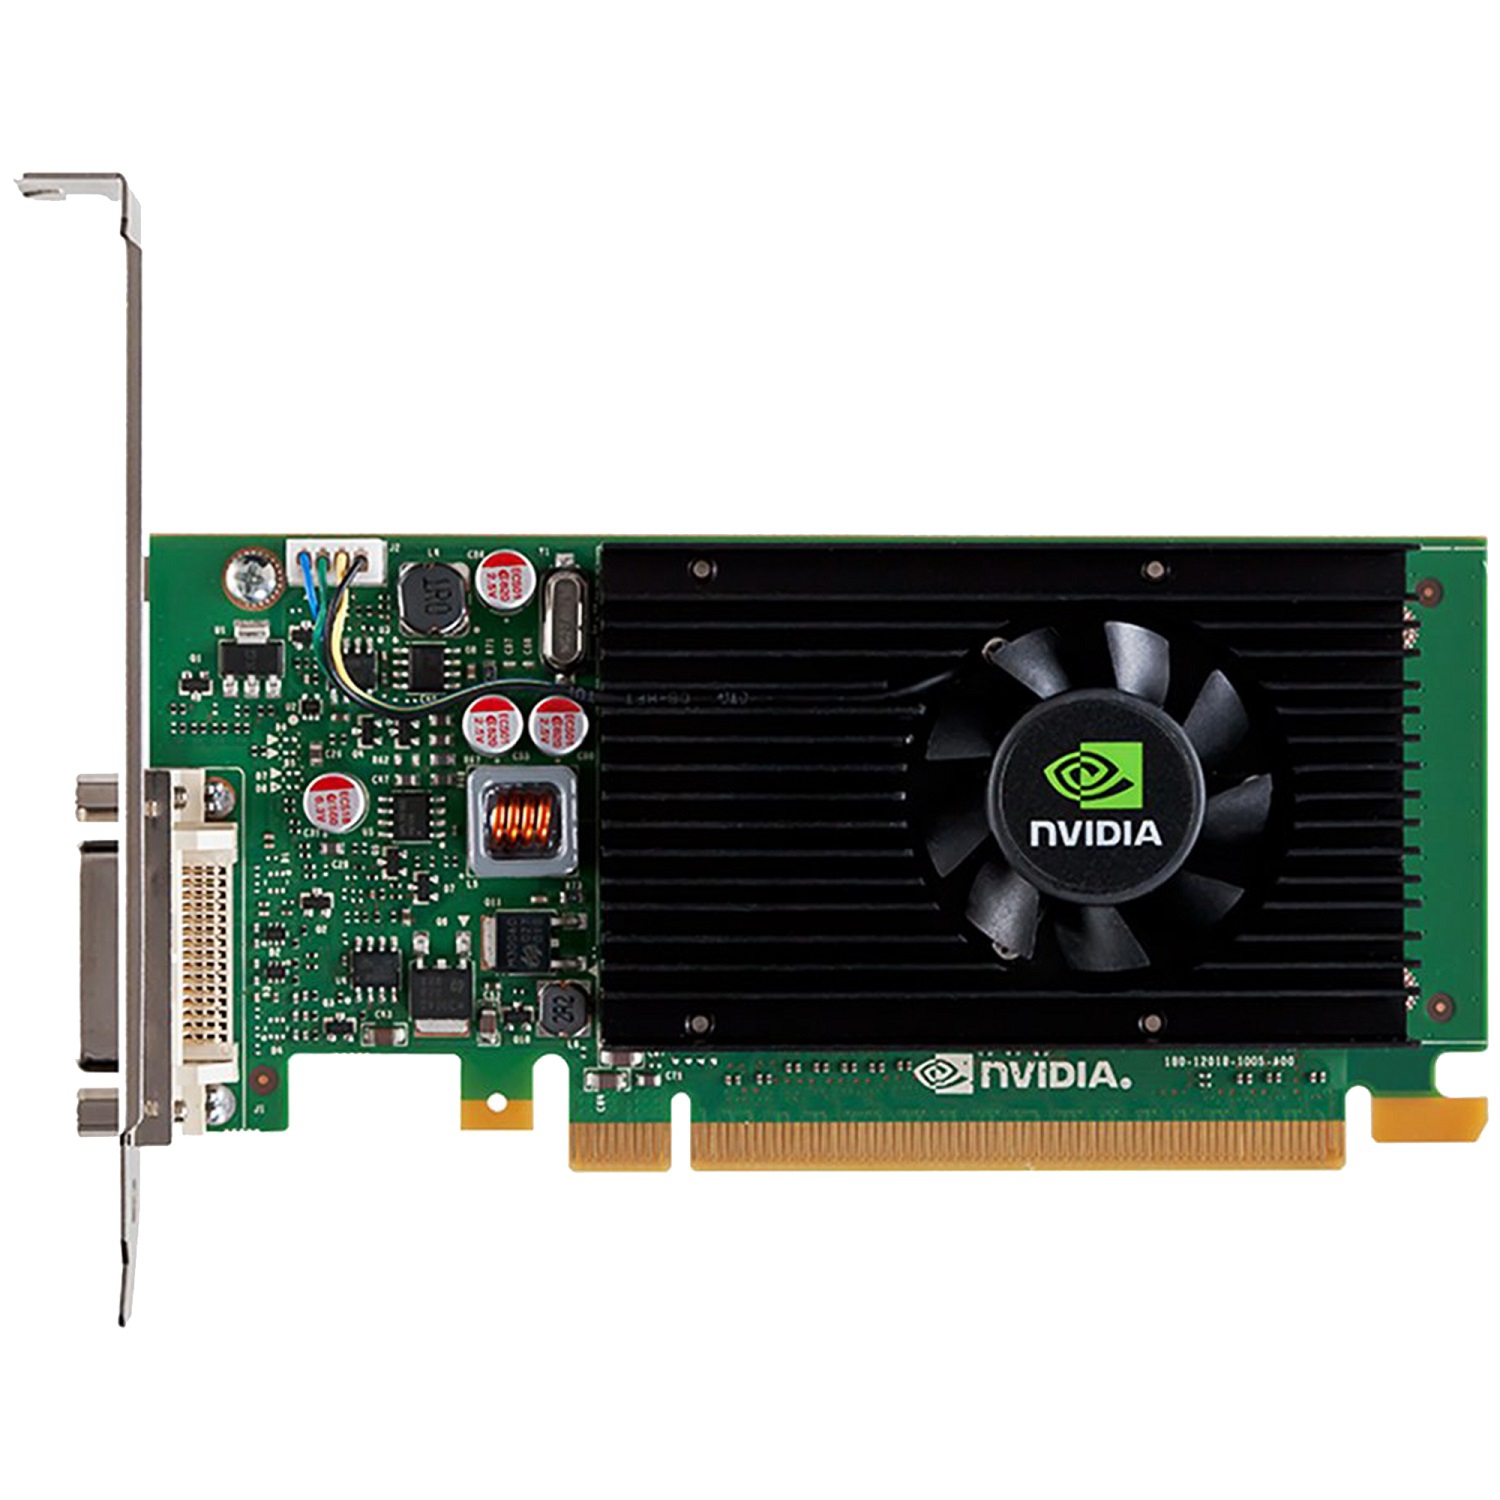 Refurbished (Good) - NVIDIA NVS 315 Professional Video Card (1GB DDR3 64-bit/ PCI Express 2.0 x16/ DMS-59 port) High Profile Graphics Card